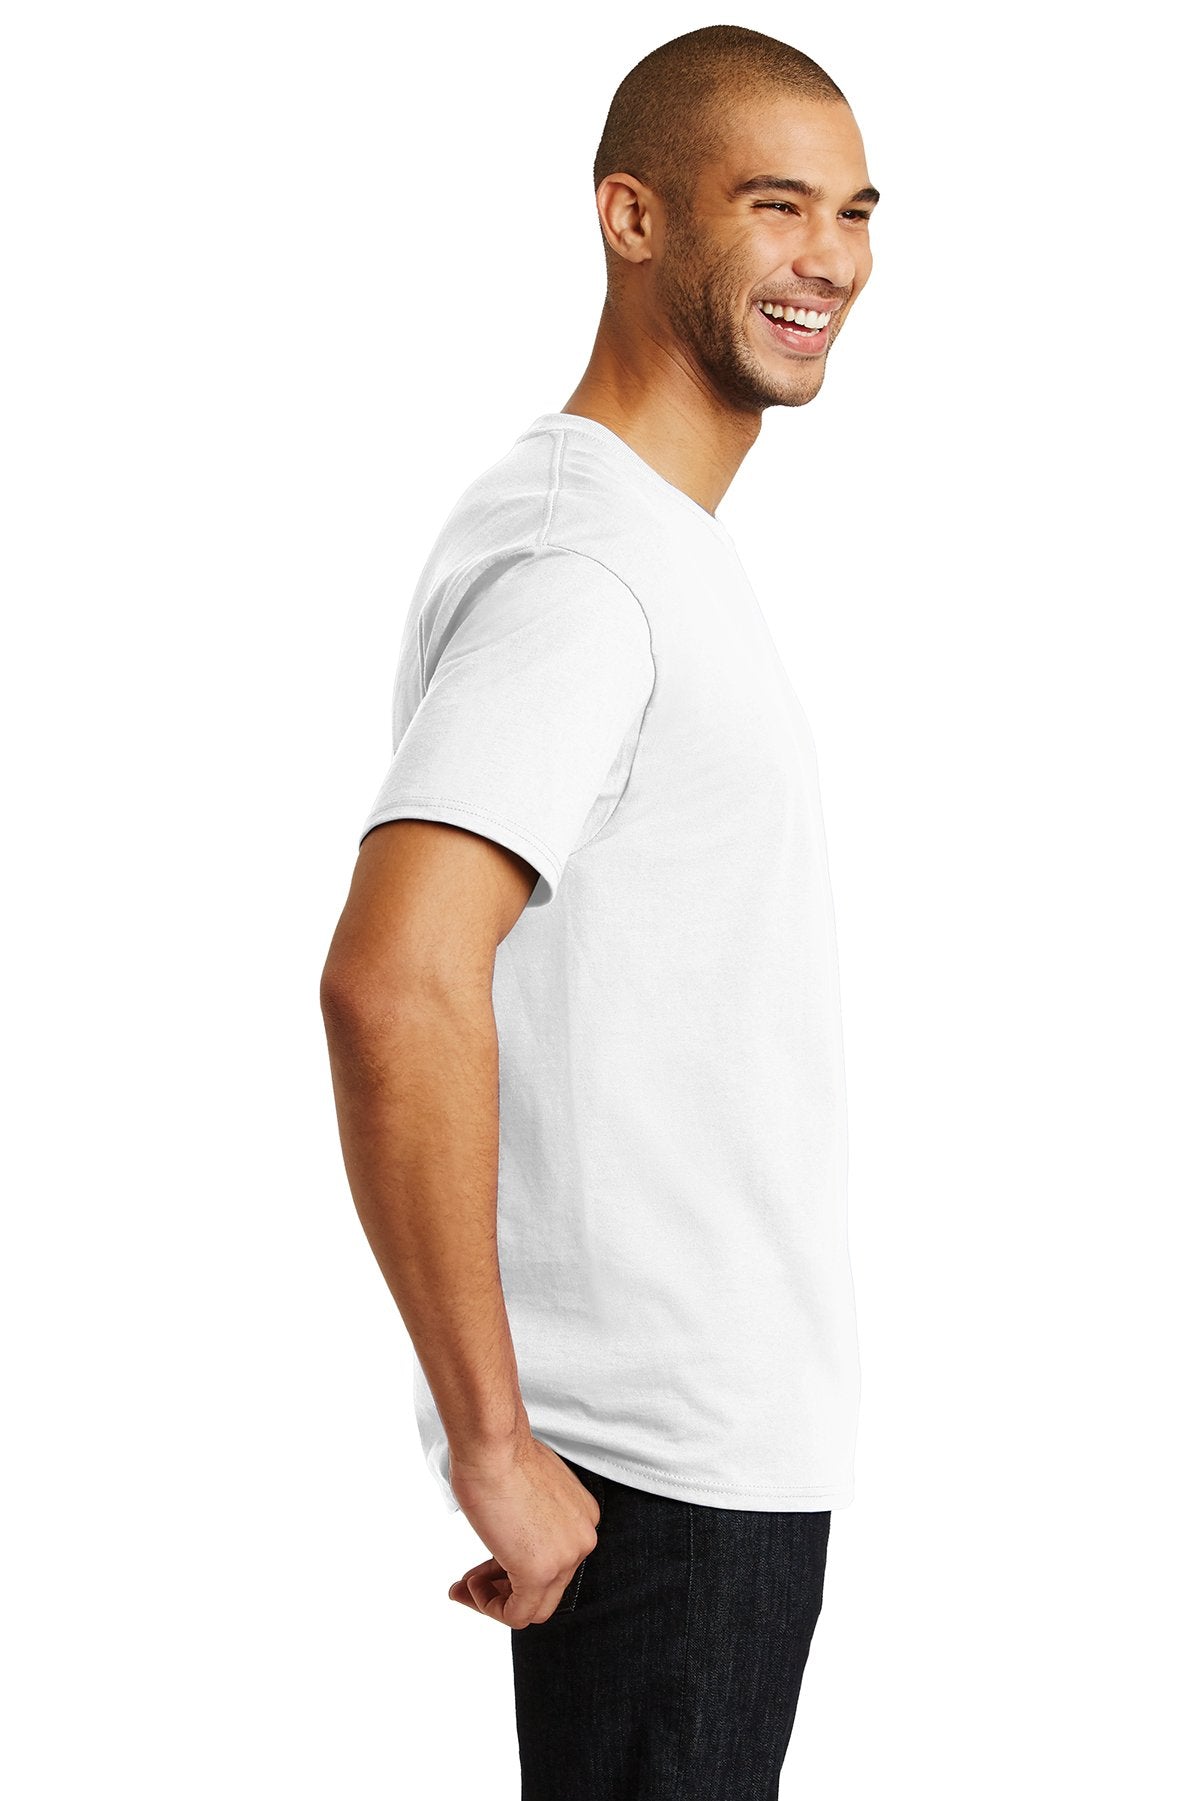 hanes tagless cotton t shirt 5250 white